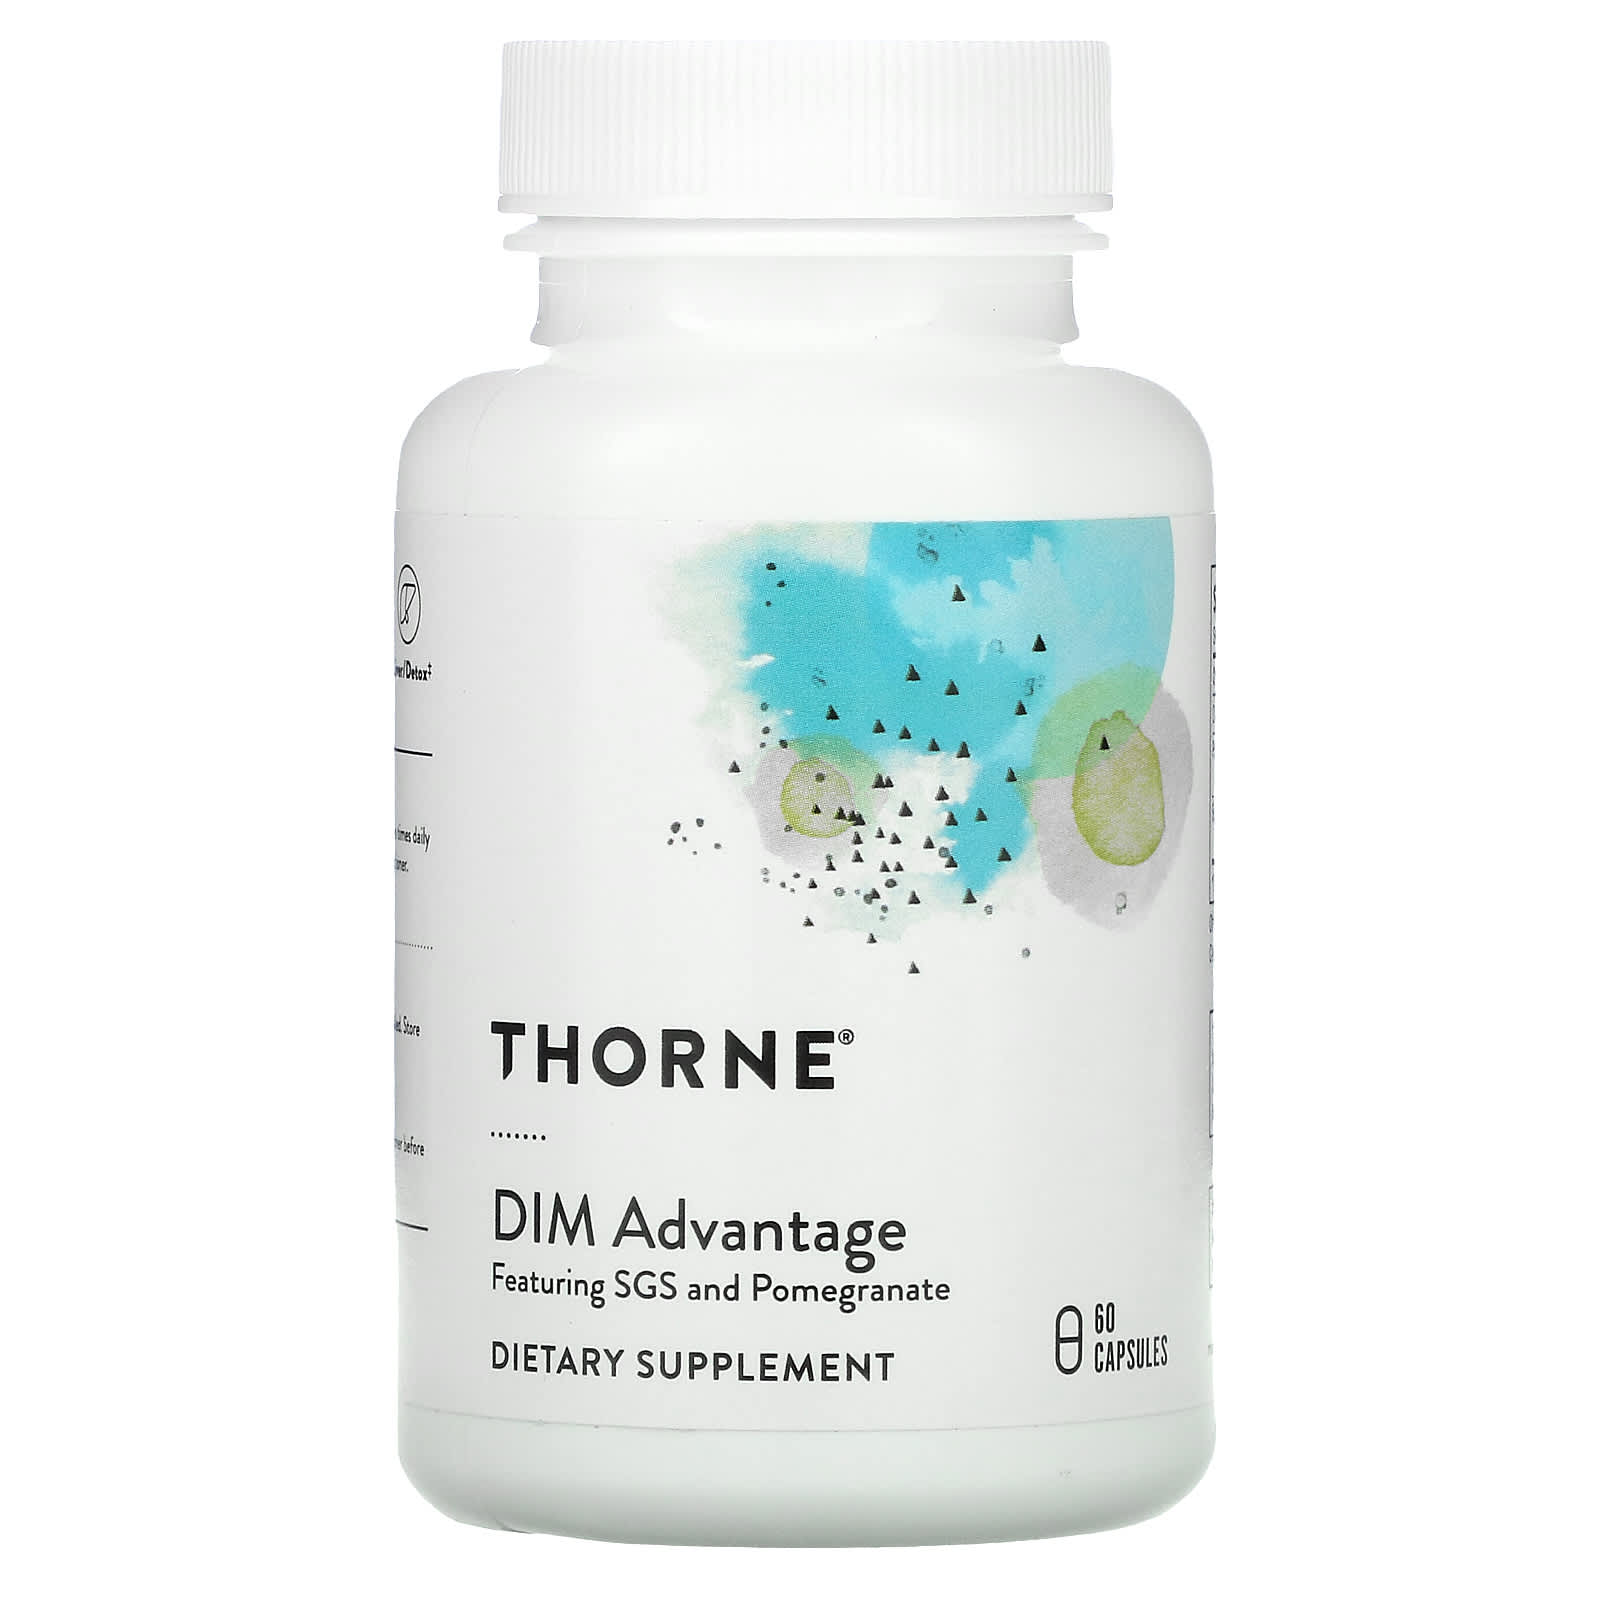 Пищевая Добавка Thorne DIM Advantage, 60 капсул пищевая добавка thorne dim advantage 60 капсул